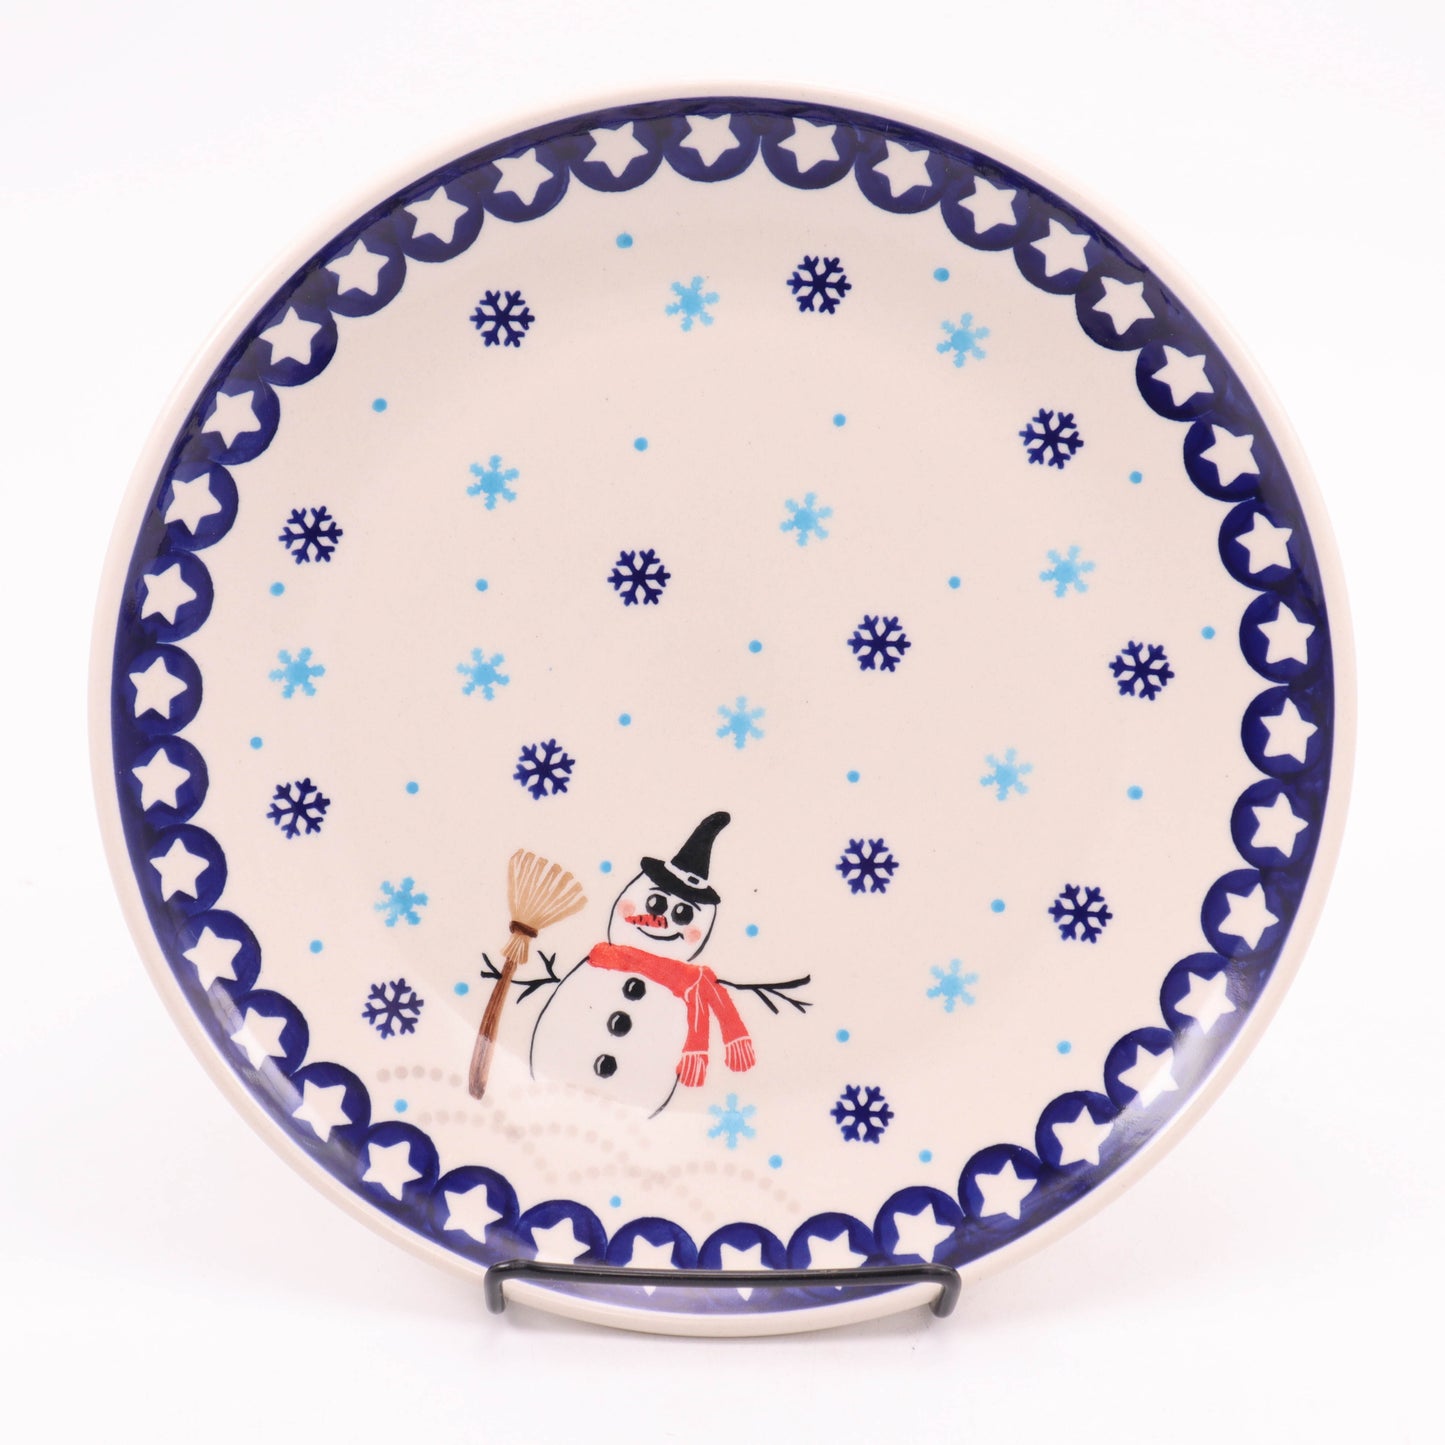 9.5" Dinner Plate. Pattern: Snowman